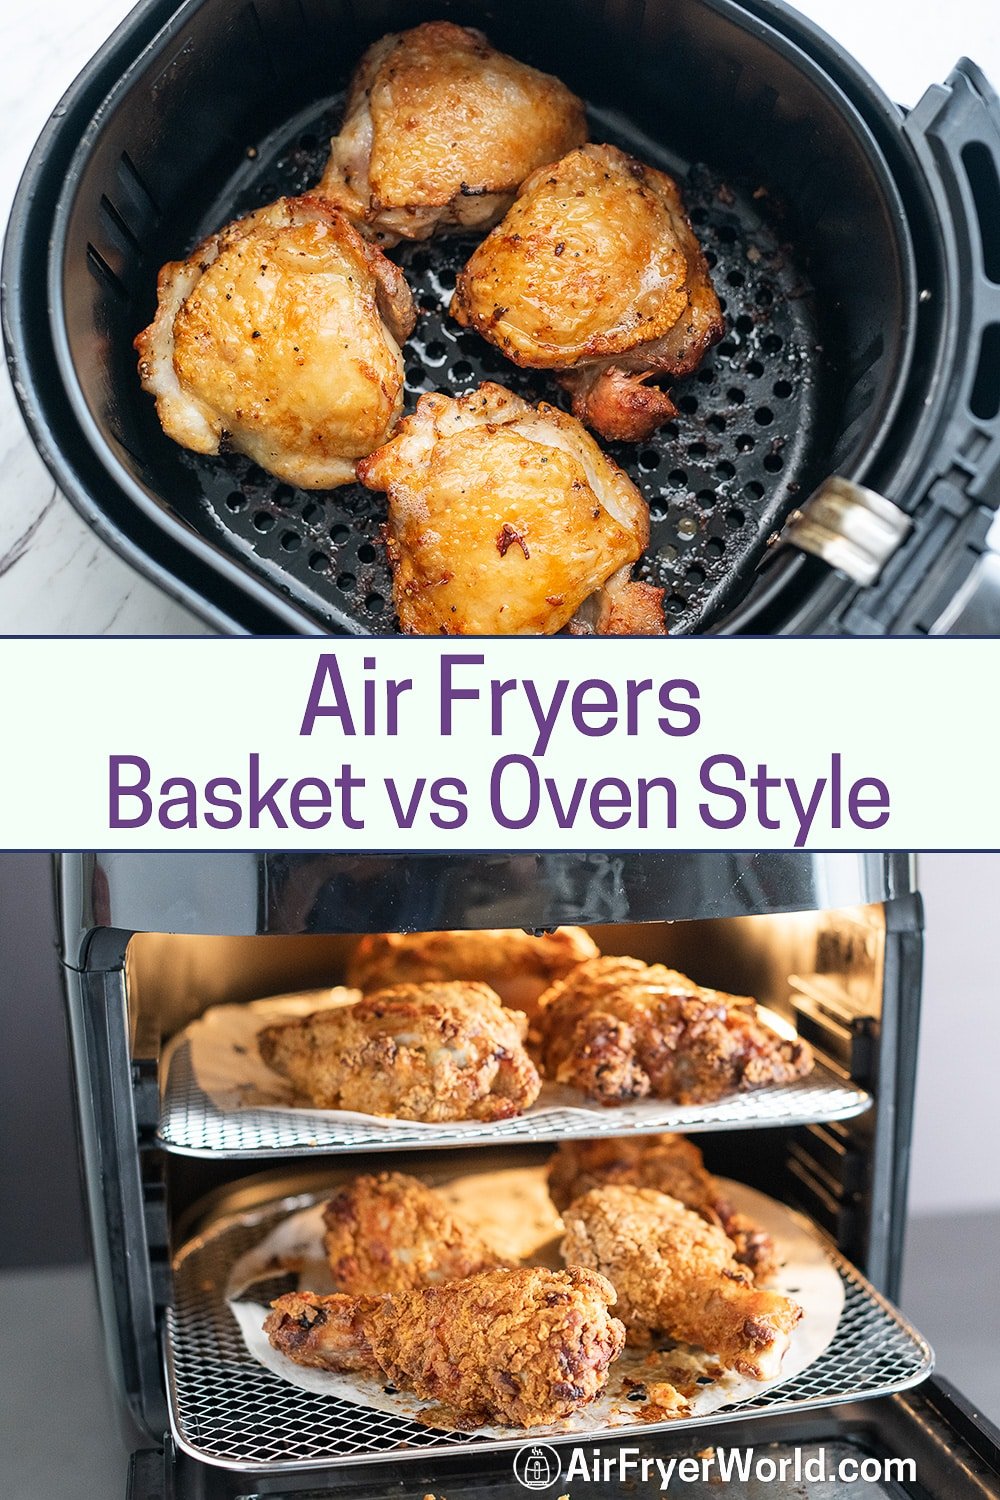 https://airfryerworld.com/images/Air-Fryer-Basket-vs-Oven-2.jpg